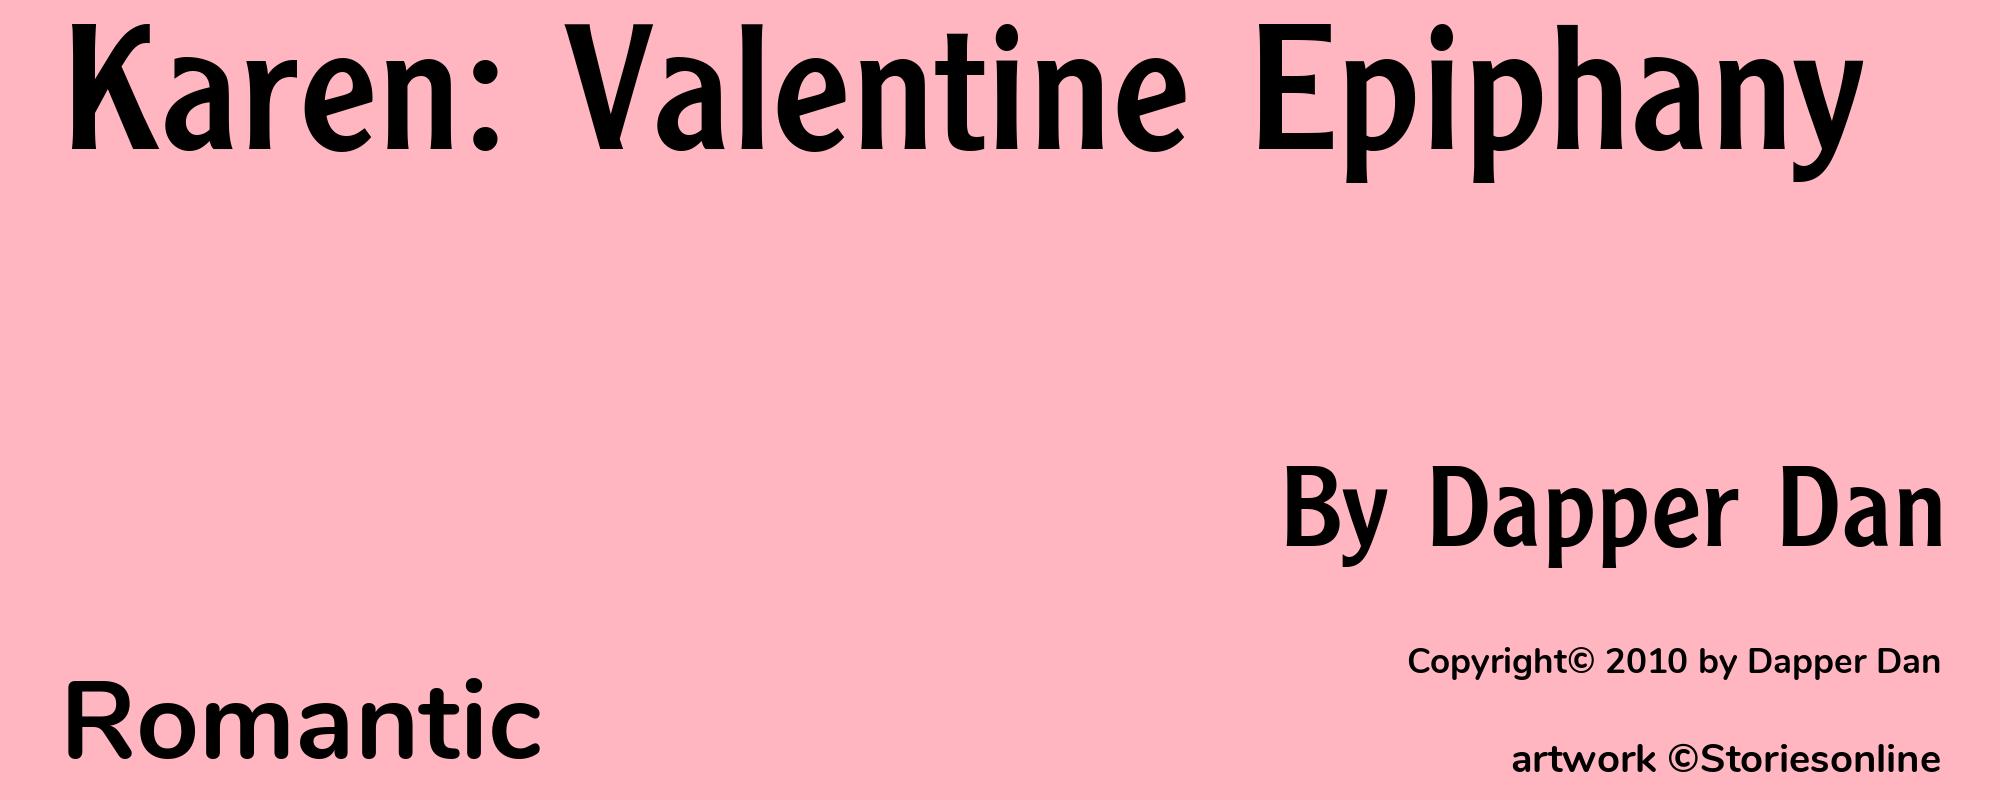 Karen: Valentine Epiphany - Cover